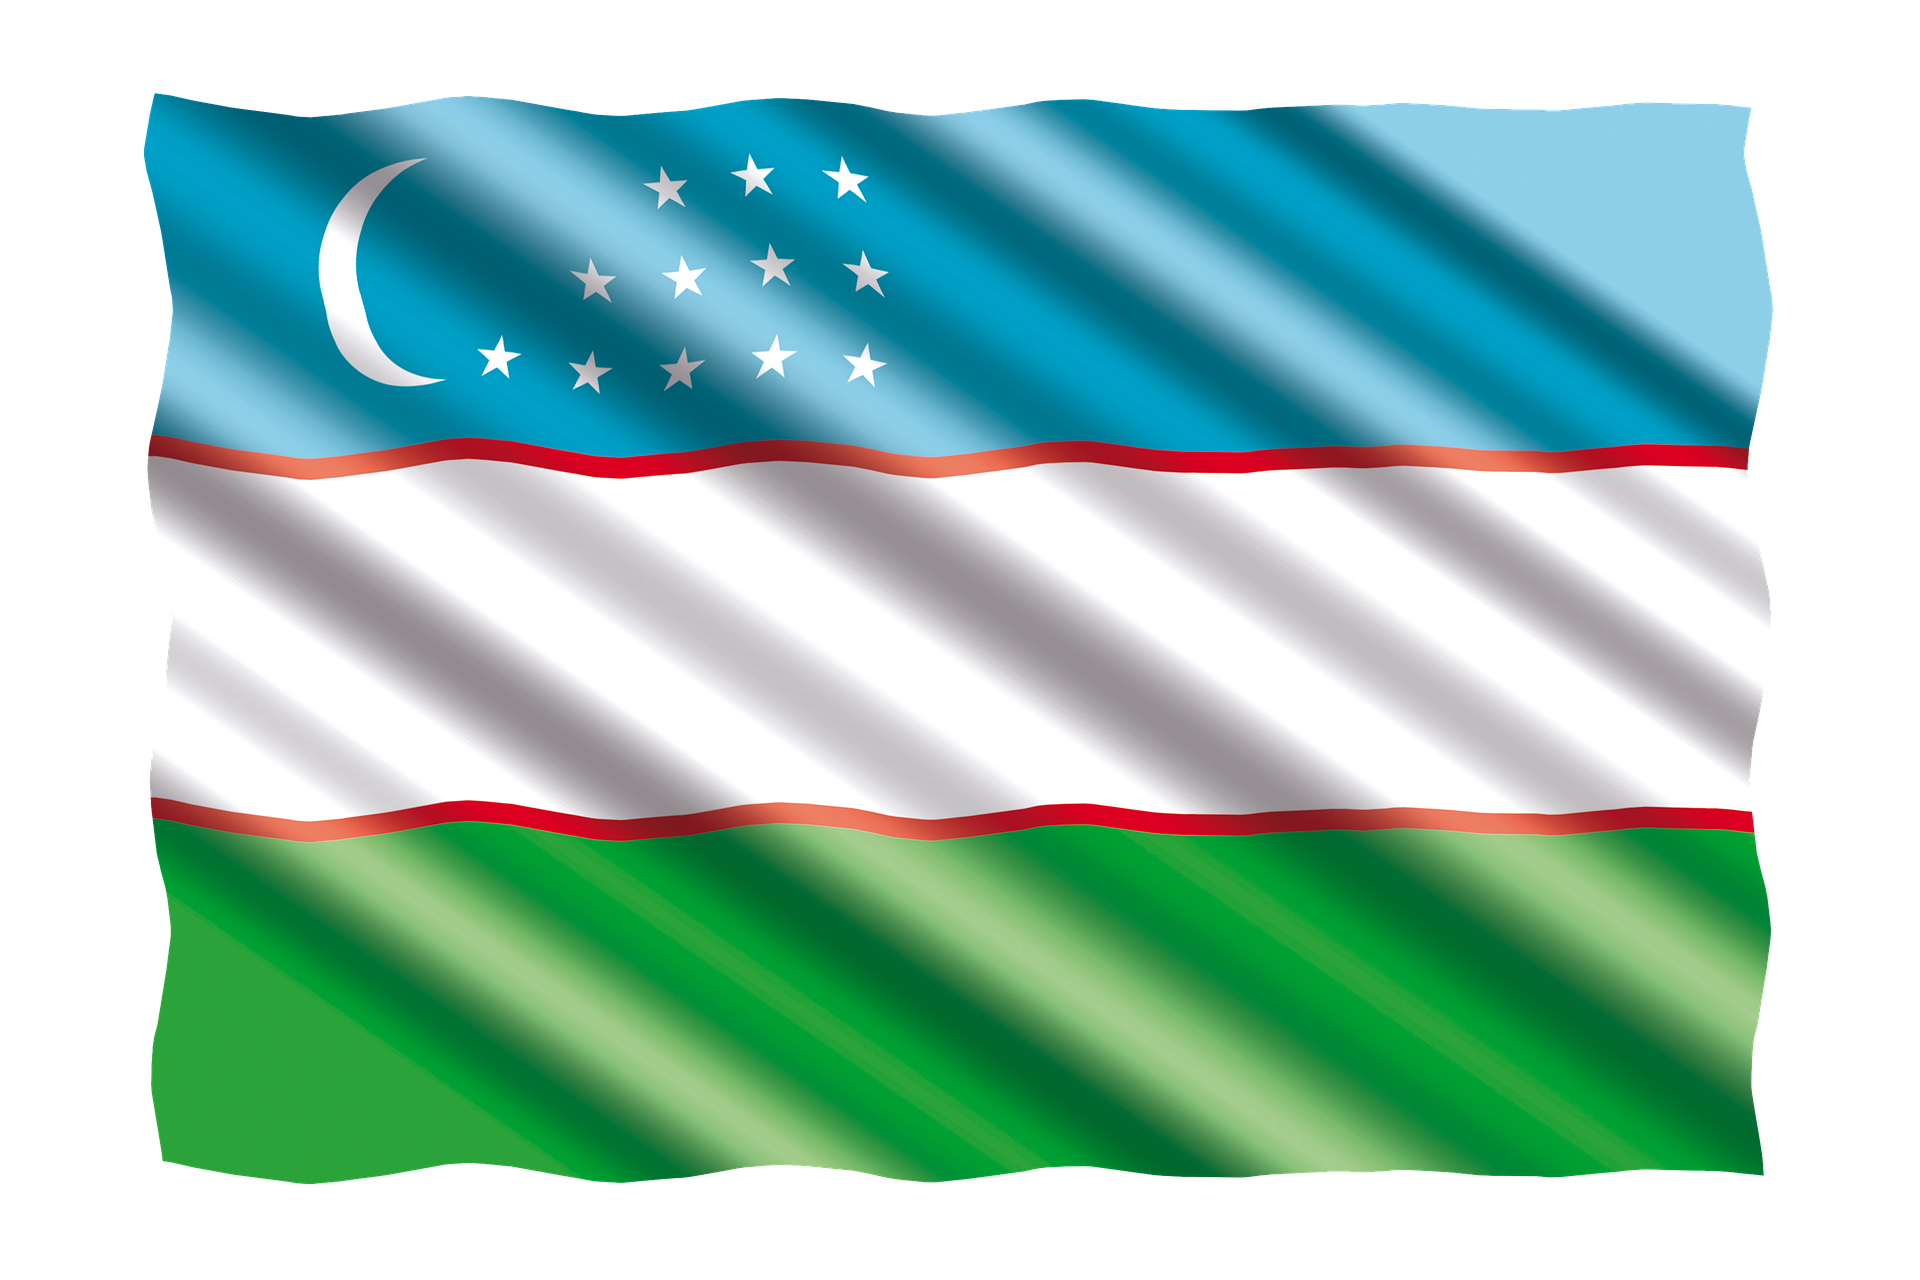 Узбекистан флаг. Флаг Республики Узбекистан. Узбекистан Республика БАЙРОГИ. Флаг Республики Узбекистан Штандарт. Уз флаг Узбекистана.